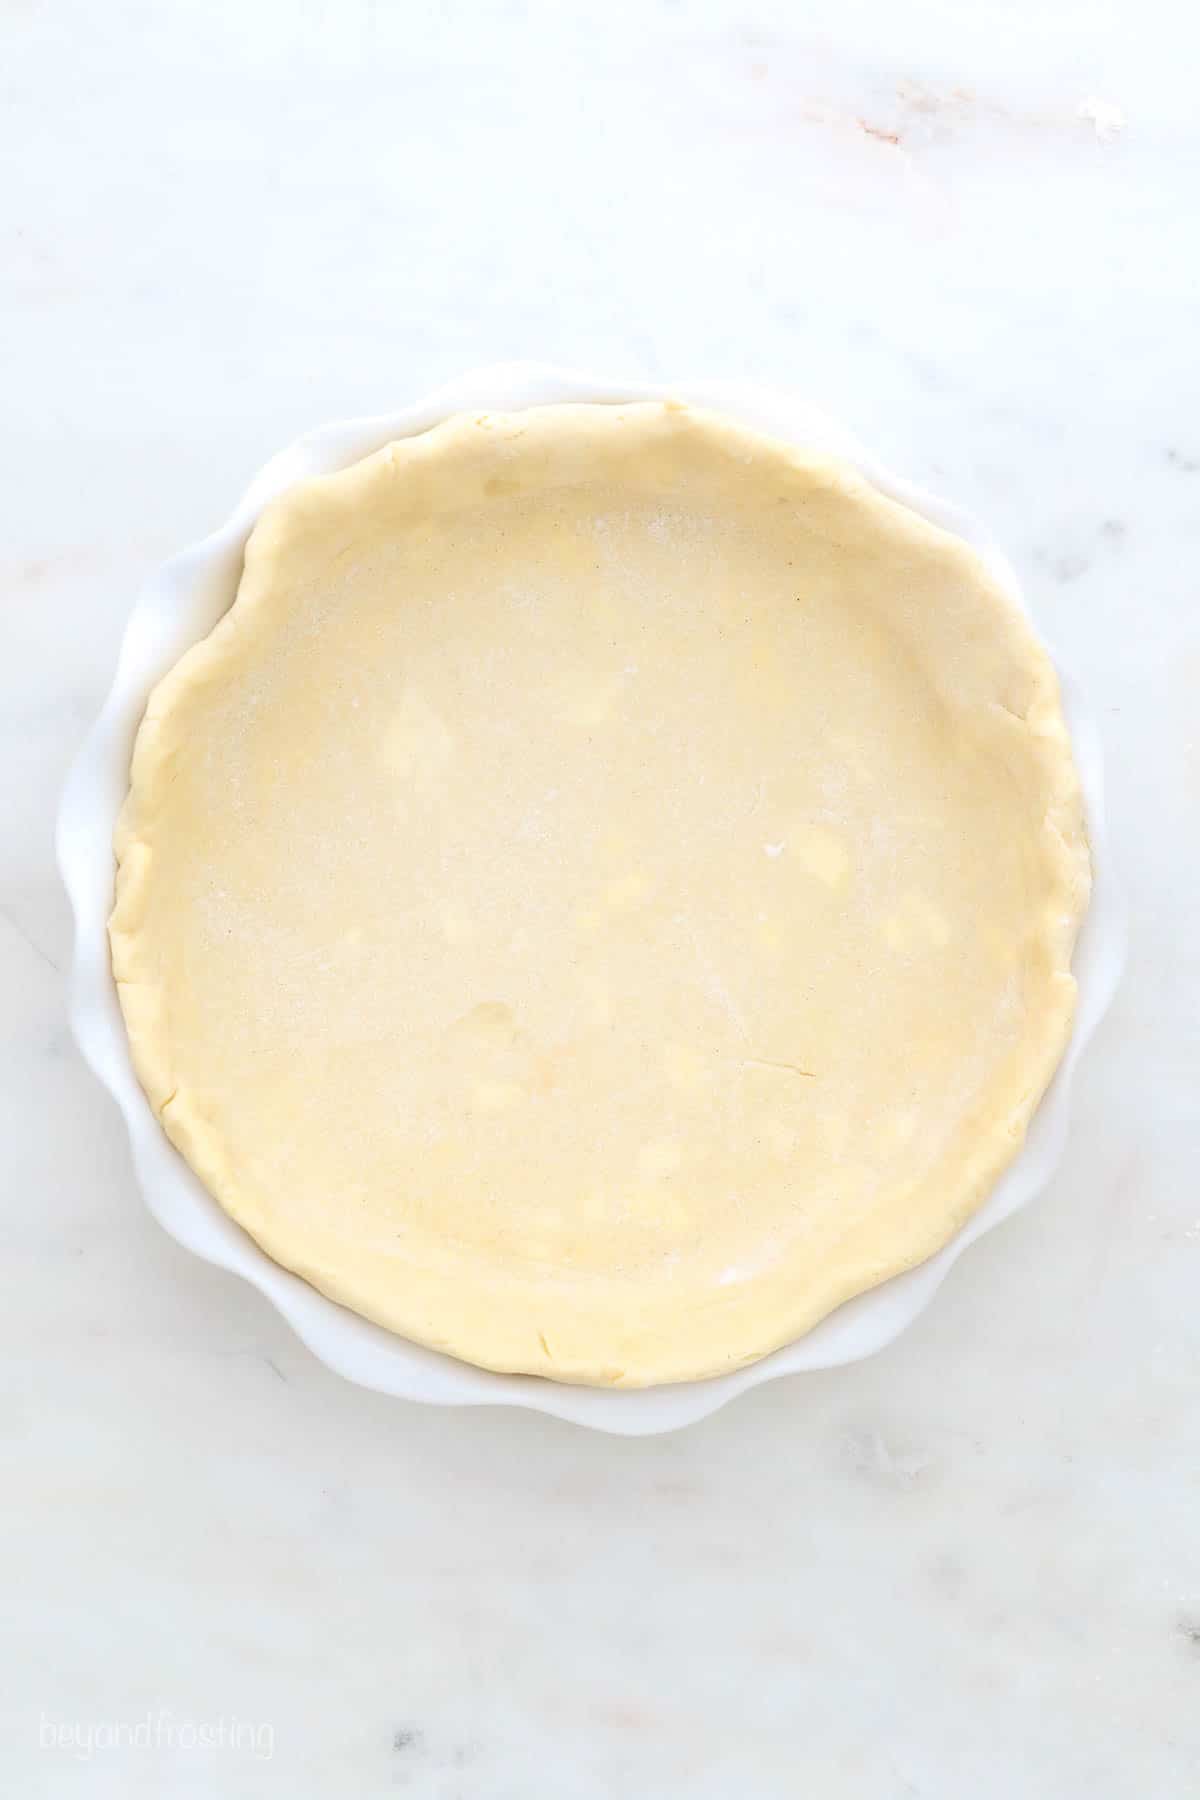 a gluten-free pie crust in a white pie dish